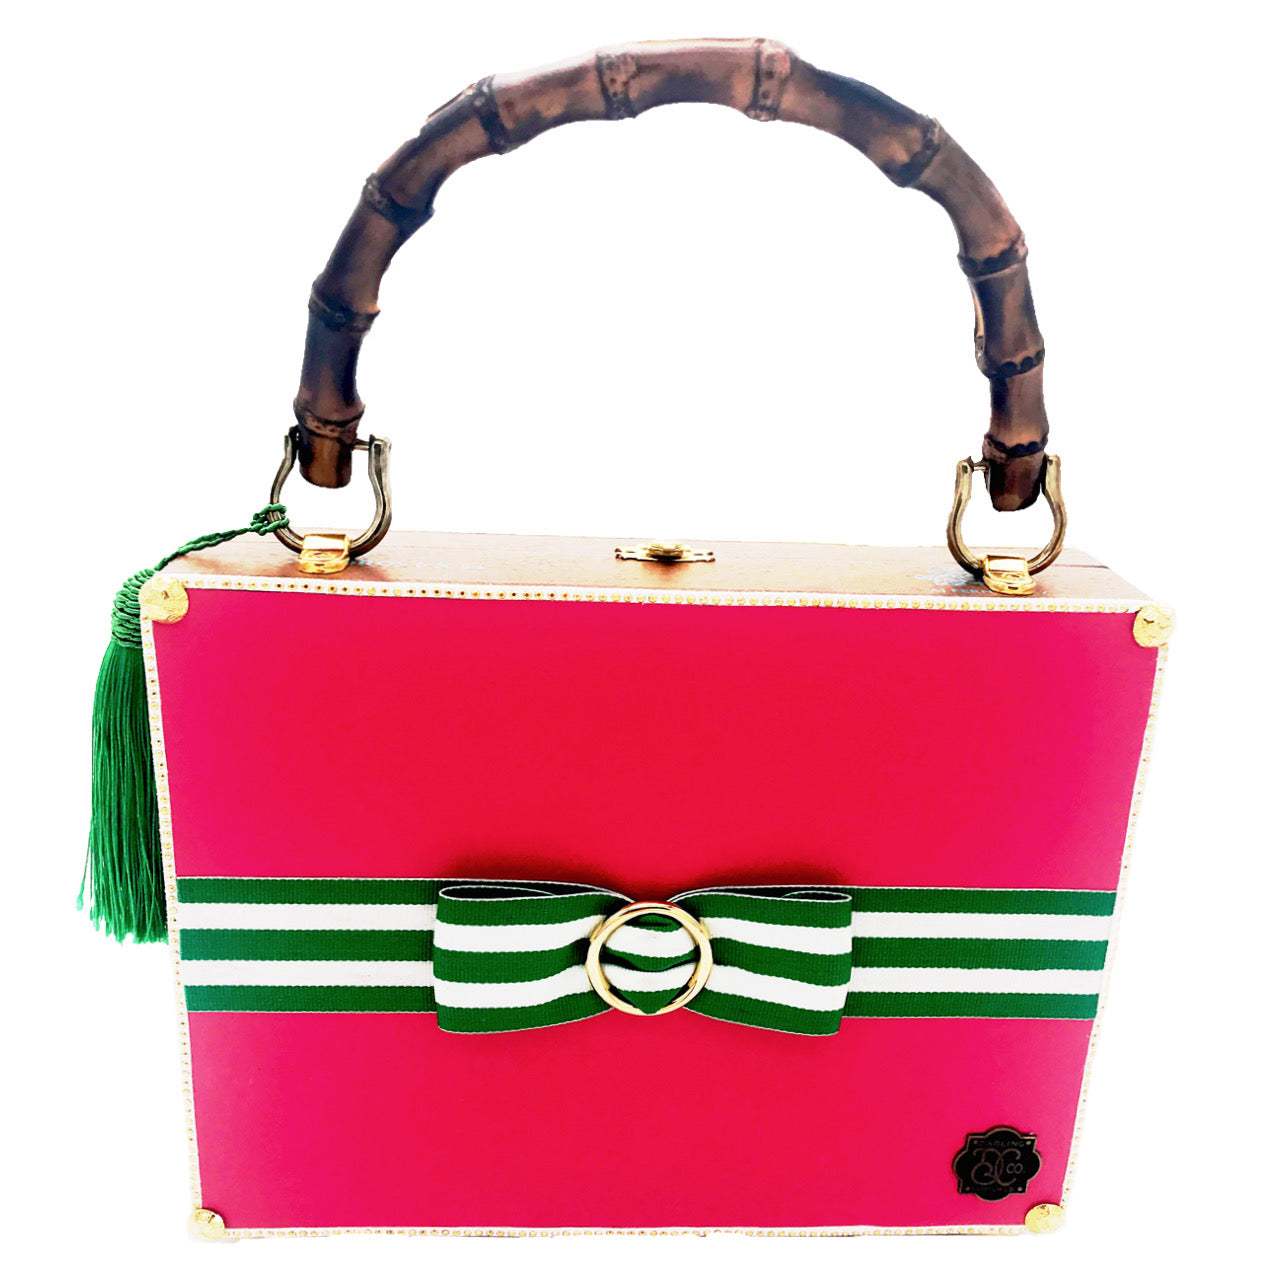 Handbags | Zara Purse | Freeup